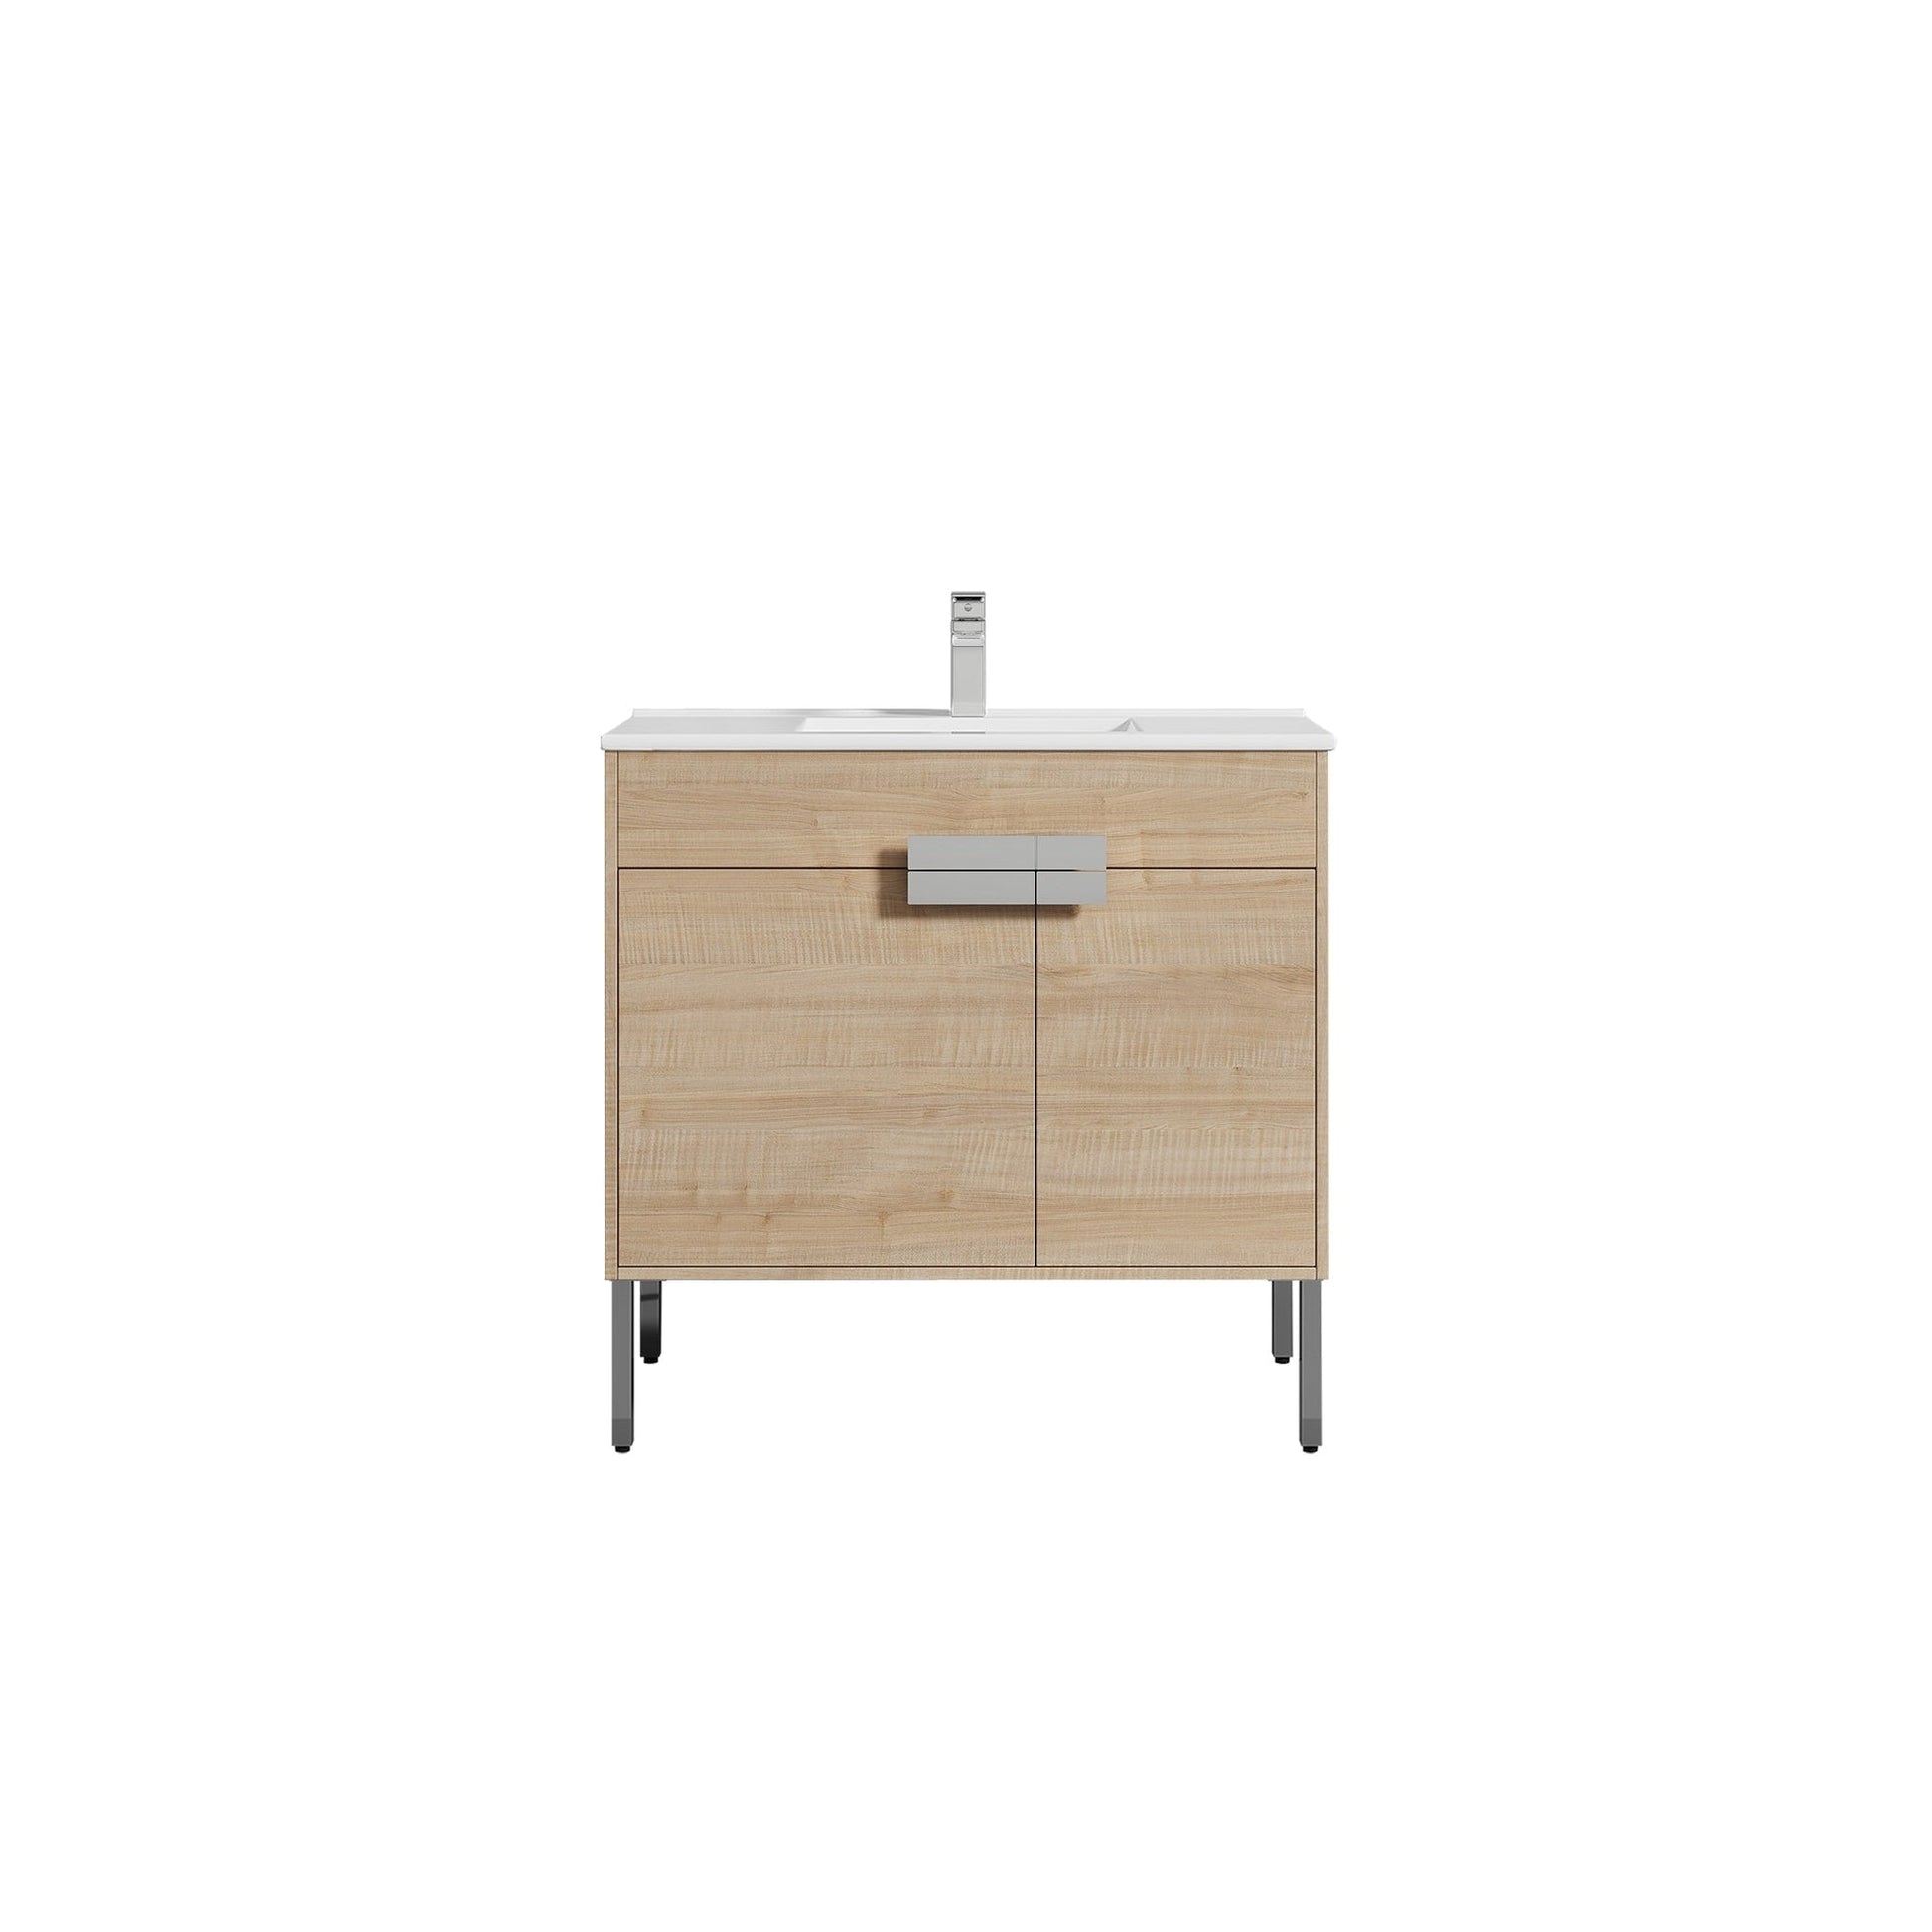 Blossom Bari 36" 2-Door Maple Freestanding Single Vanity Base With Adjustable Shelf, Chrome Handles & Legs